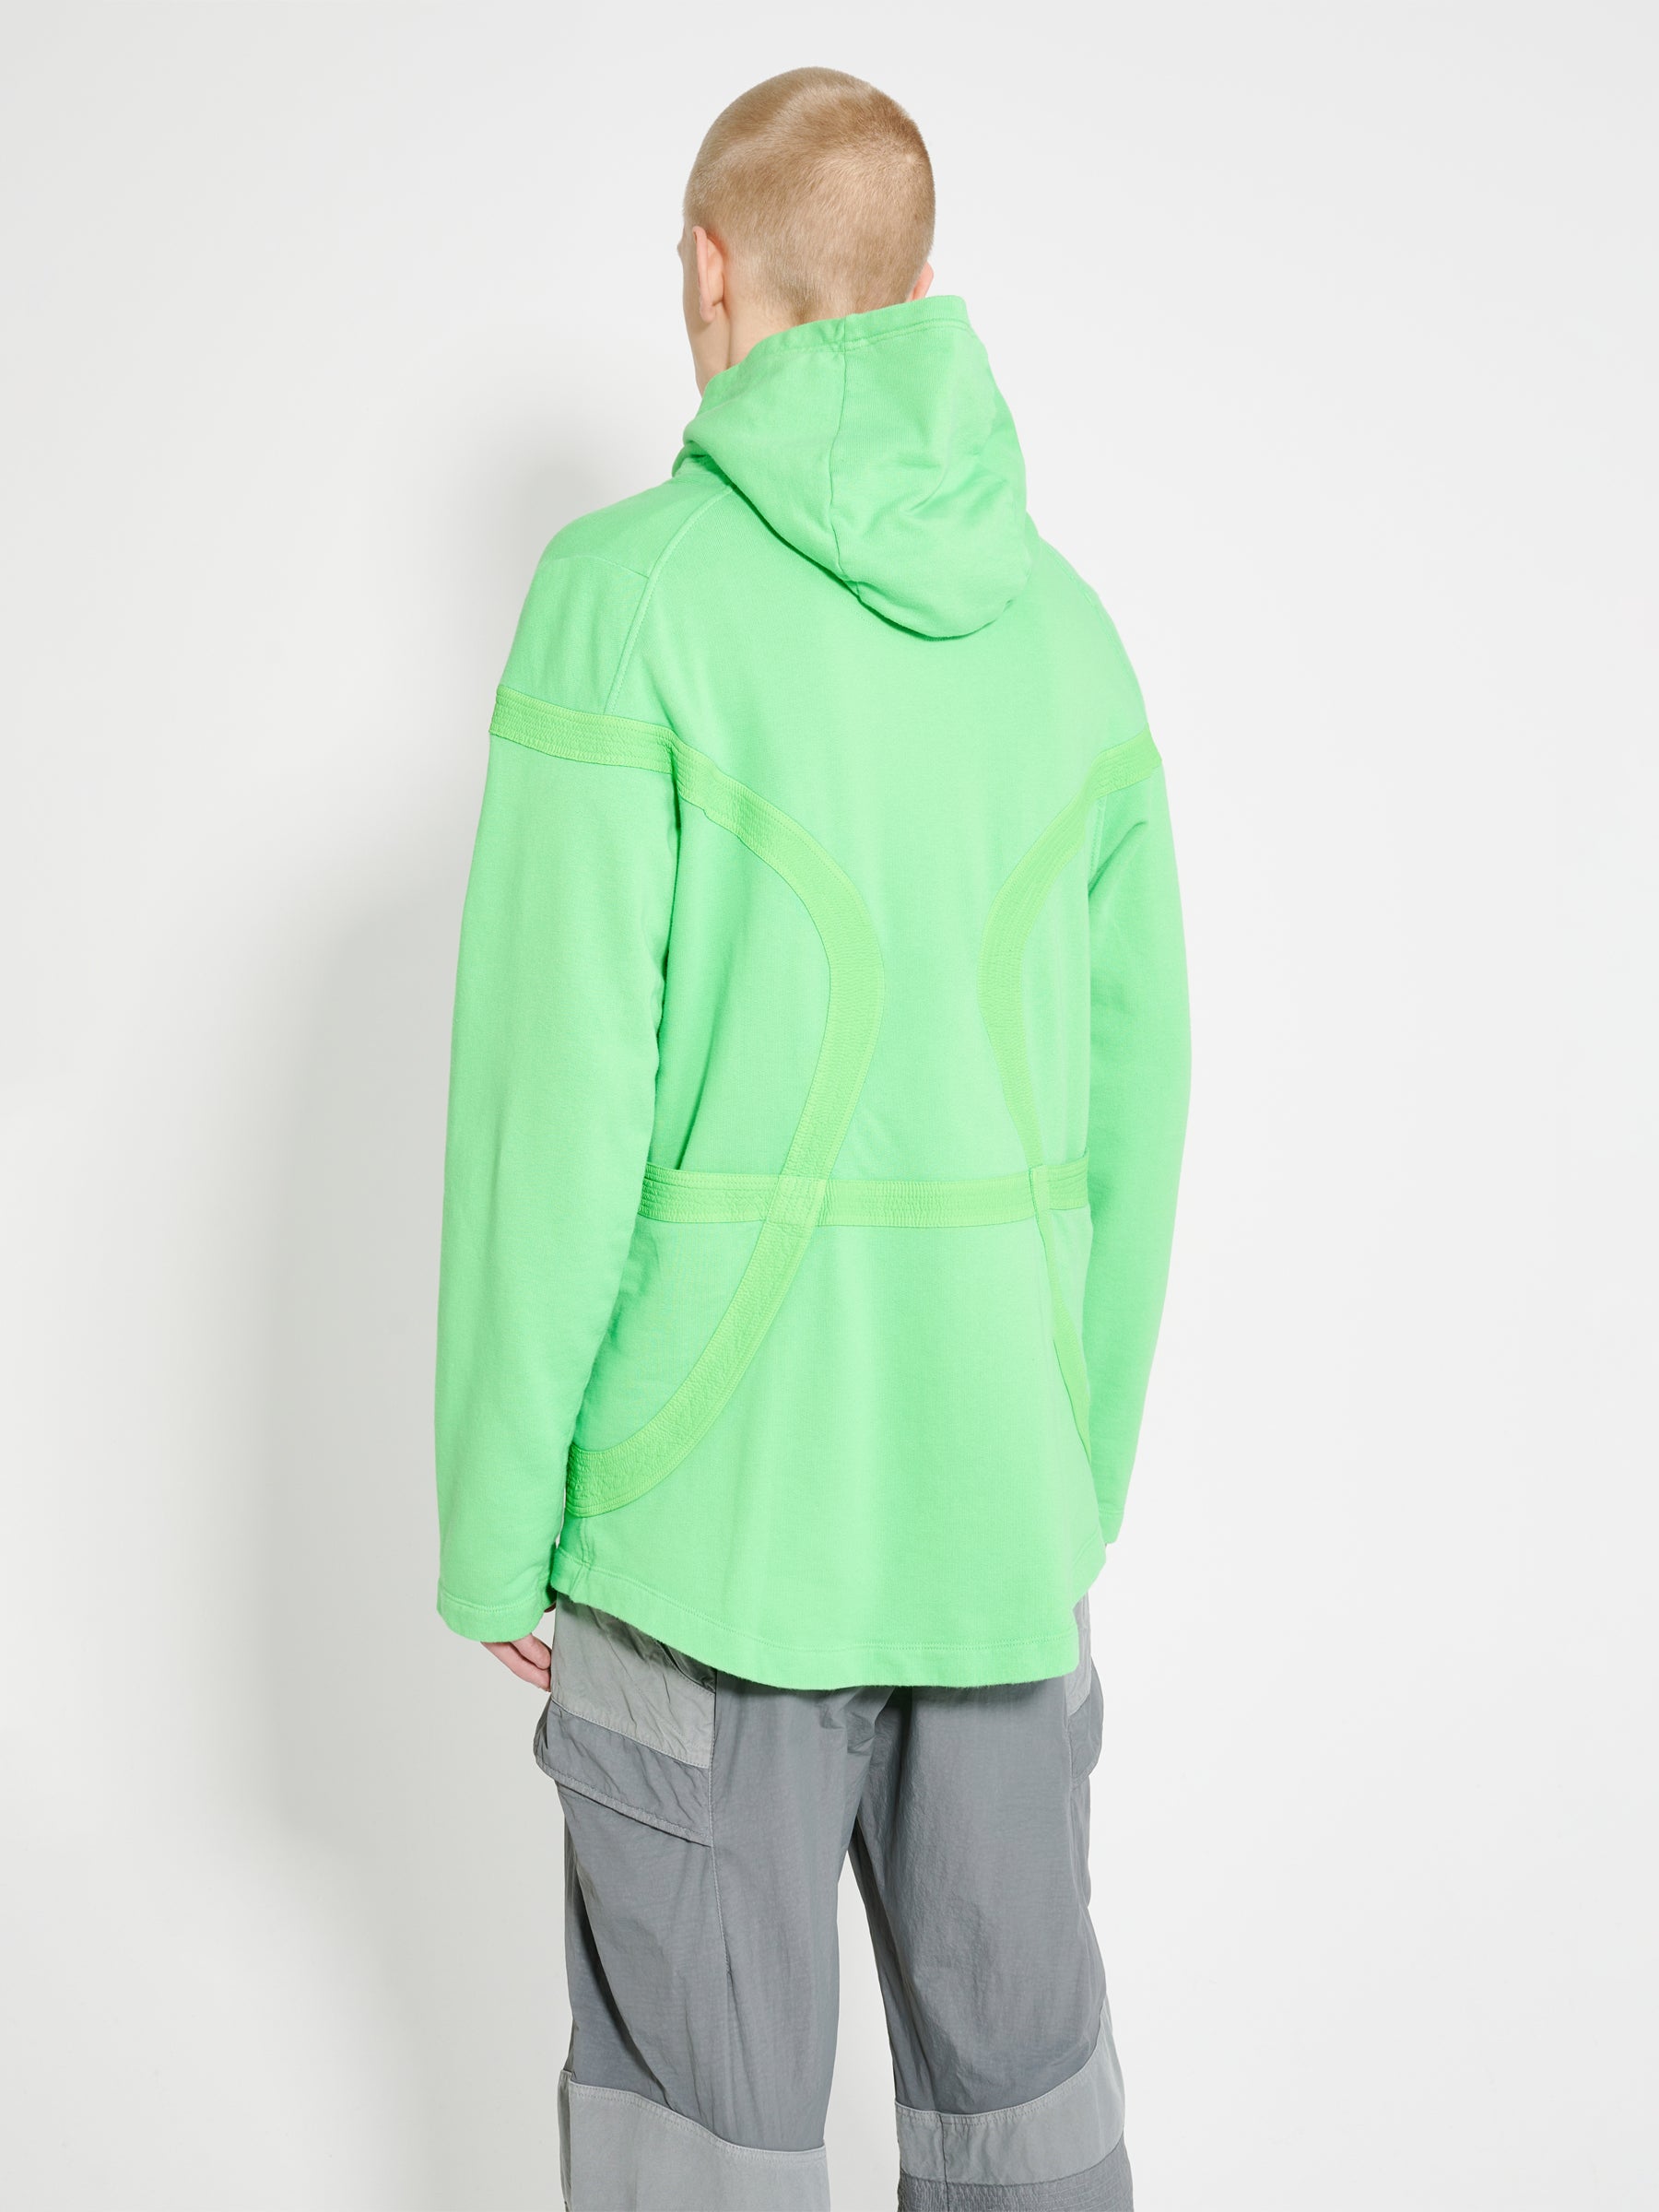 Kiko Kostadinov x C.P. Company Sweat Hooded Green Flash